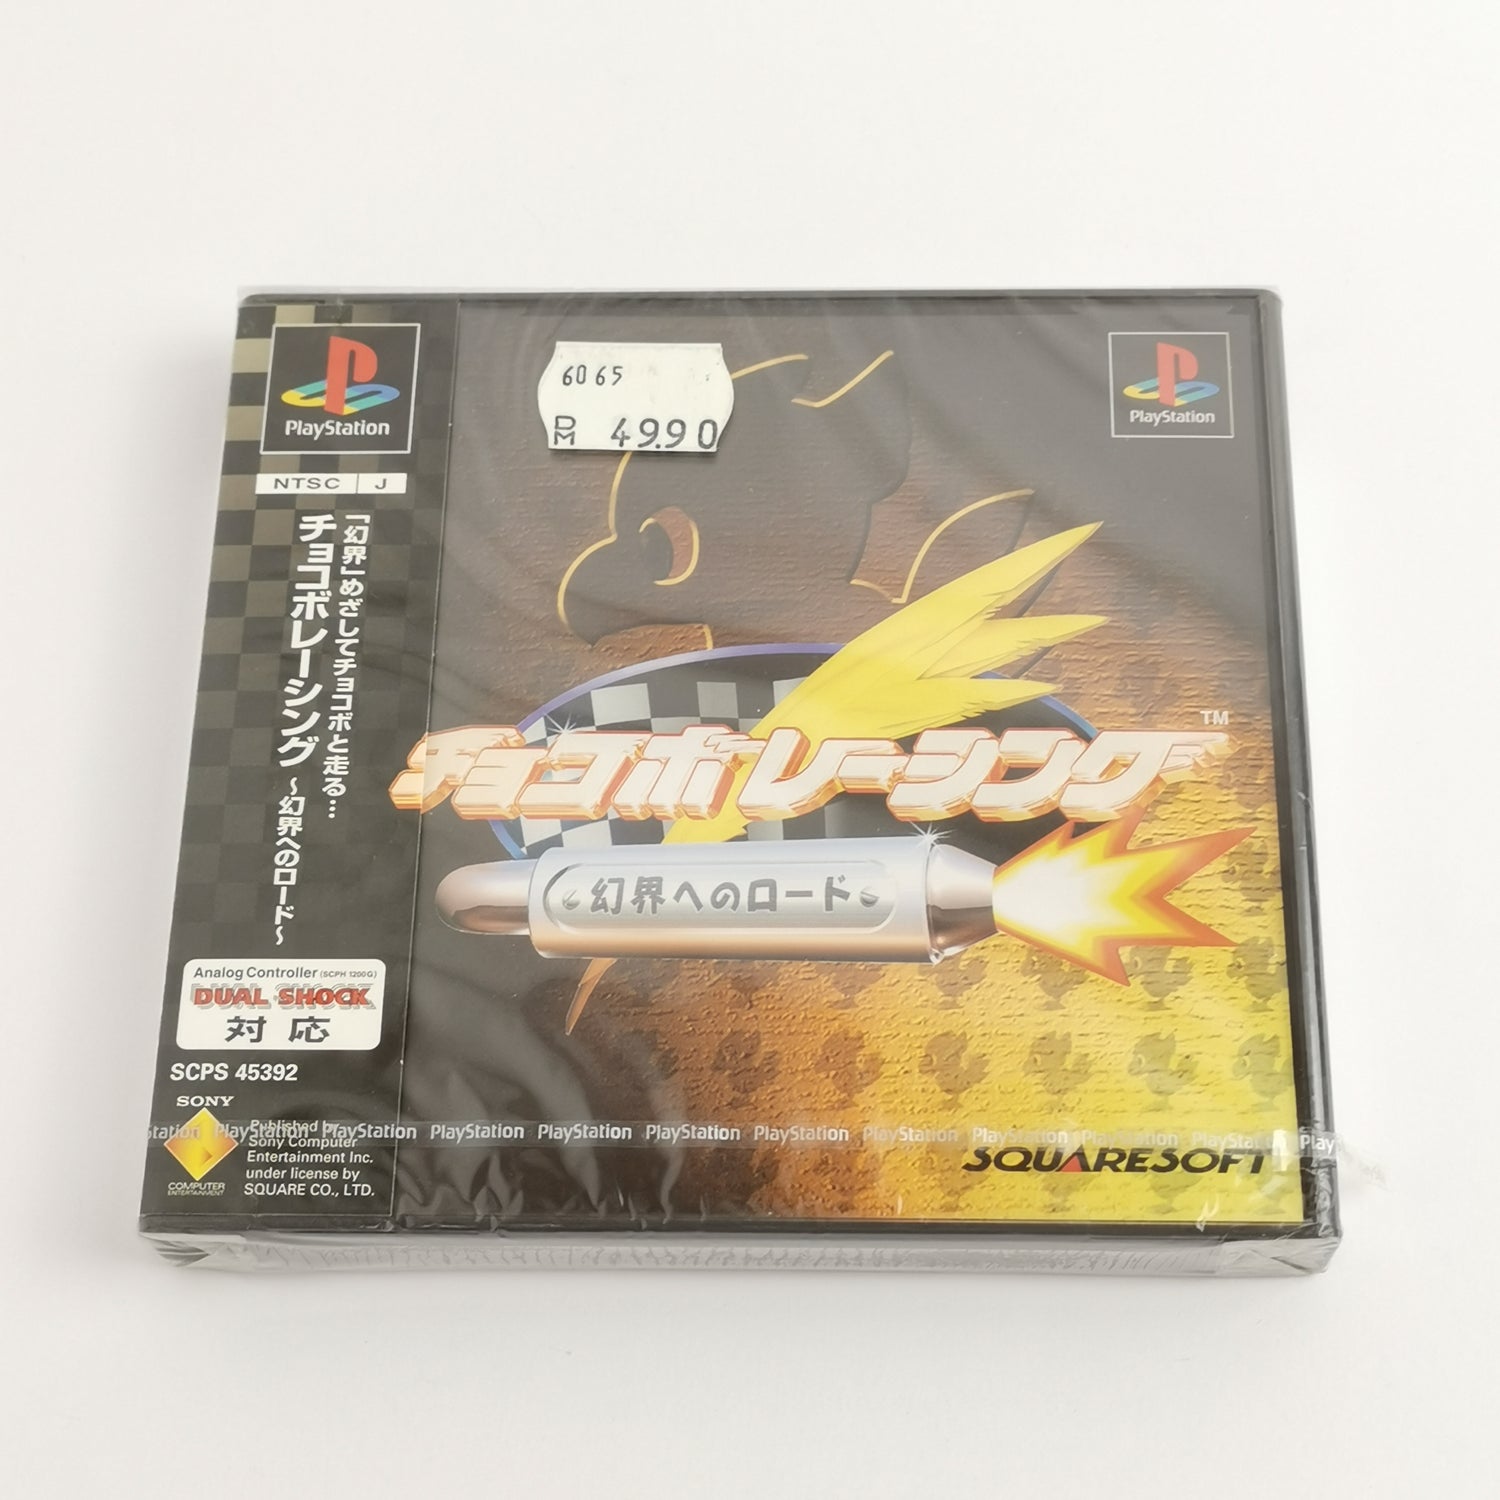 Sony Playstation 1 Game: Chocobo Racing | PS1 NTSC-J Japan - NEW SEALED